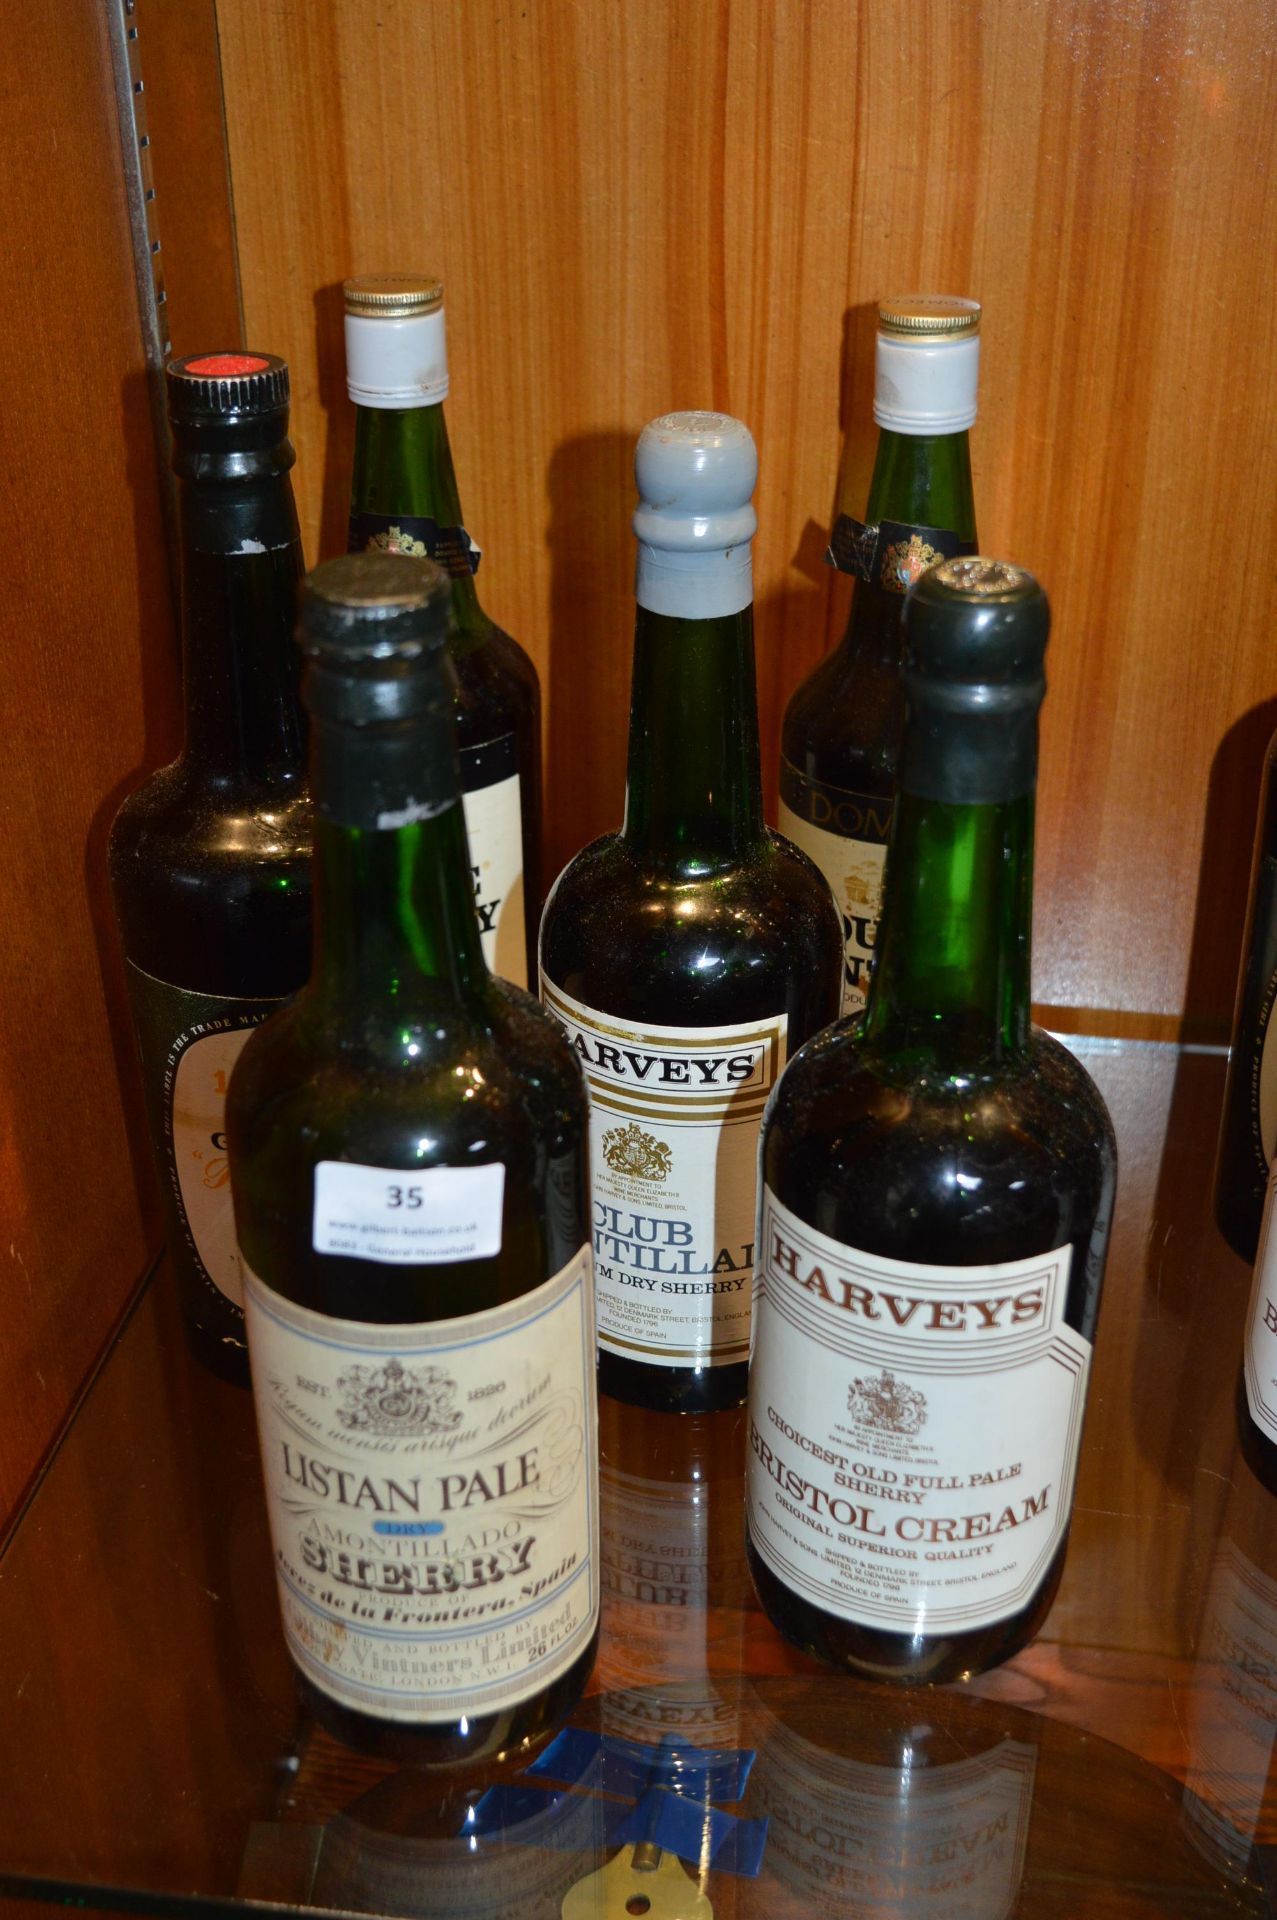 Six Bottles of Sherry, Harveys Bristol Cream, etc.